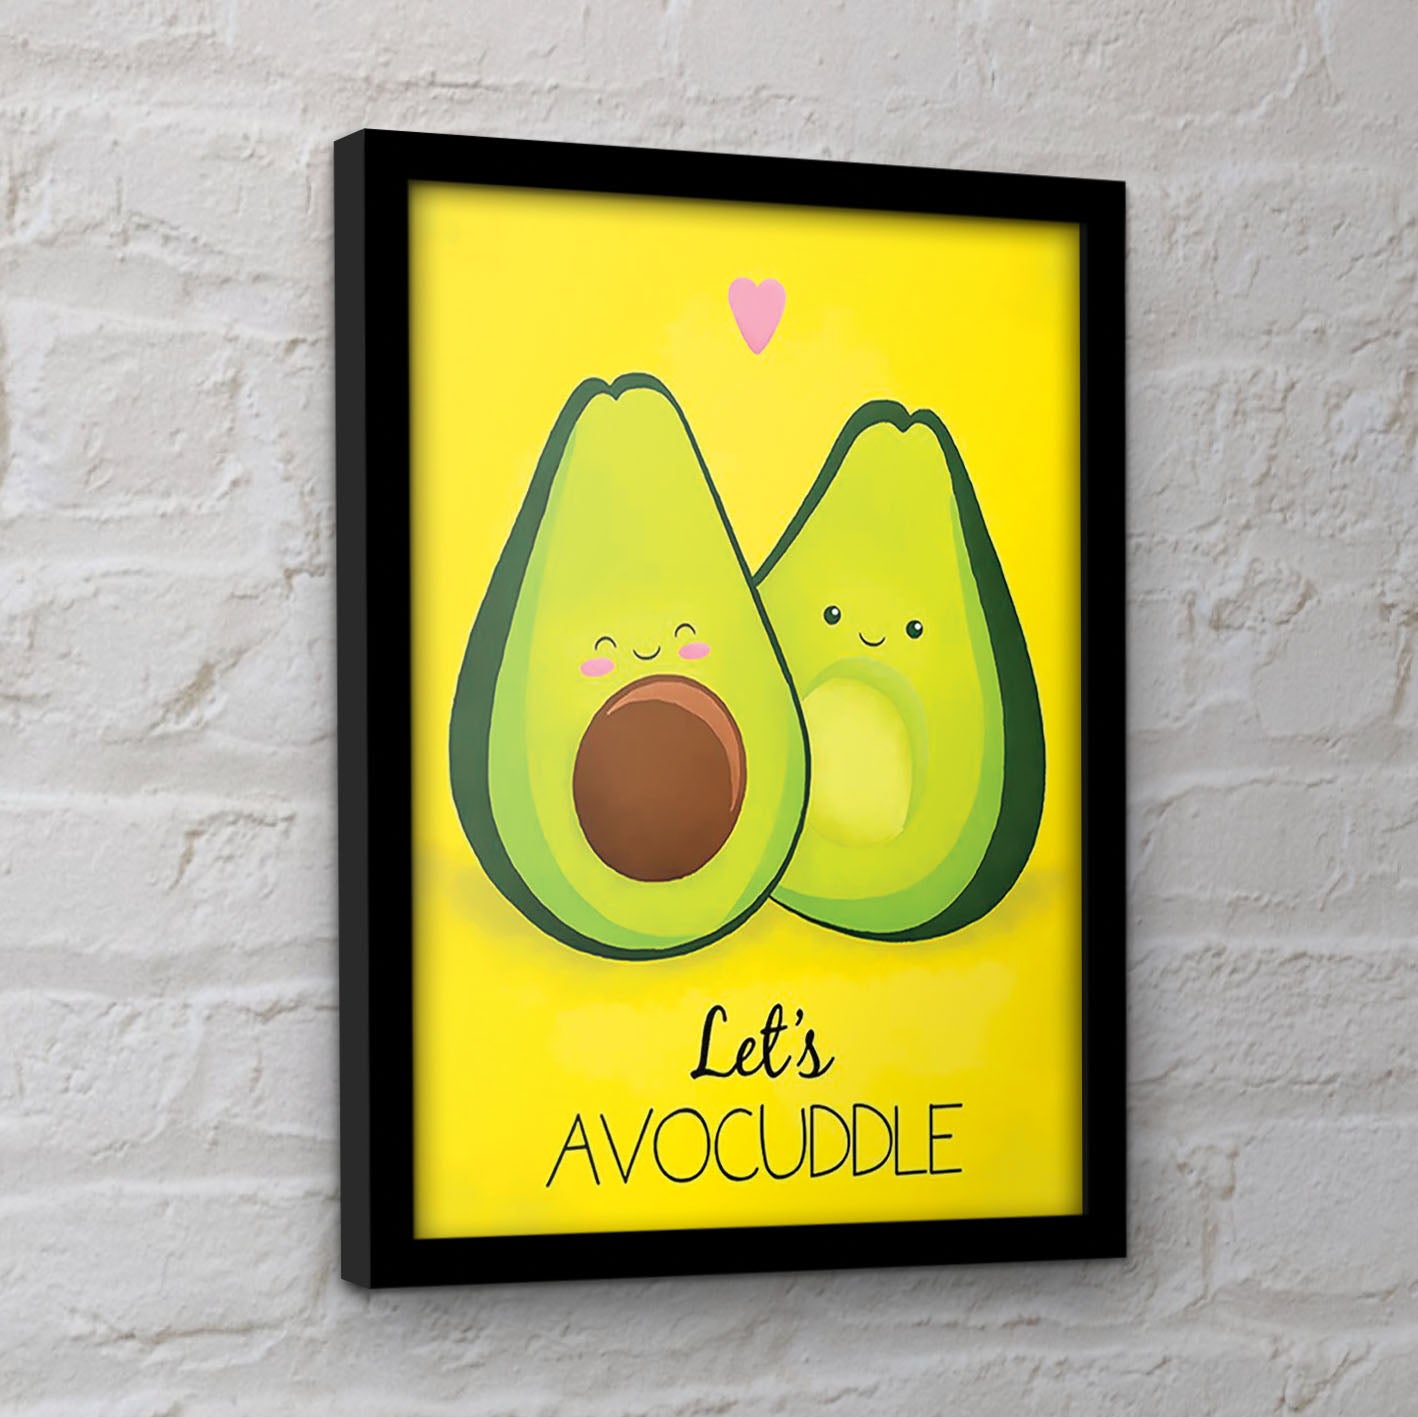 Avocuddle) – International (Lets Pyramid Avocado